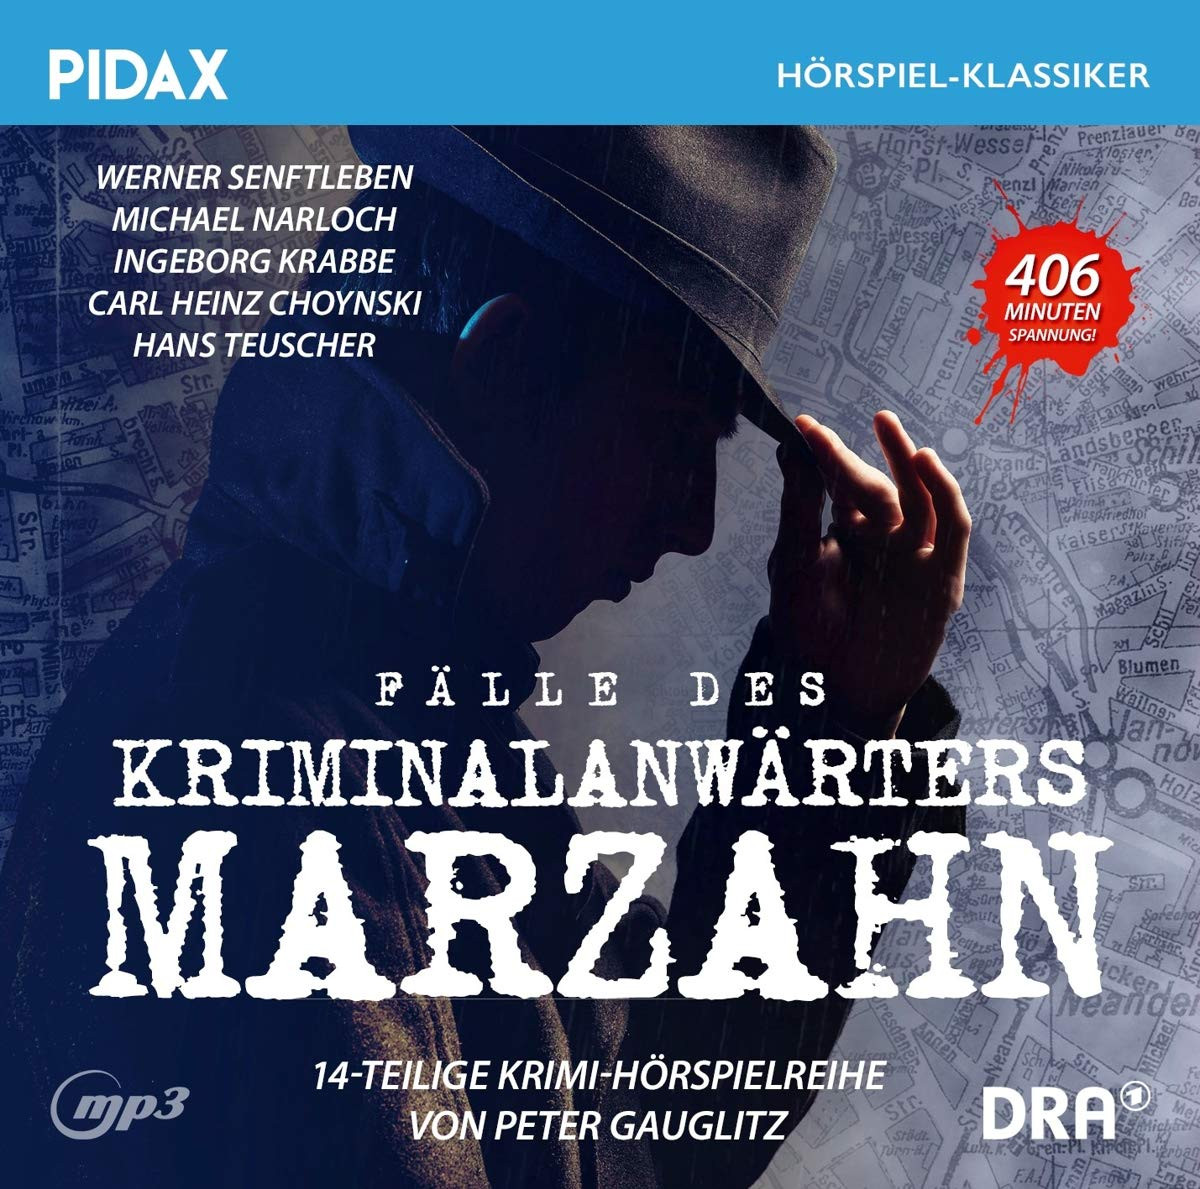 Pidax Hörspiel Klassiker - Fälle des Kriminalanwärters Marzahn 